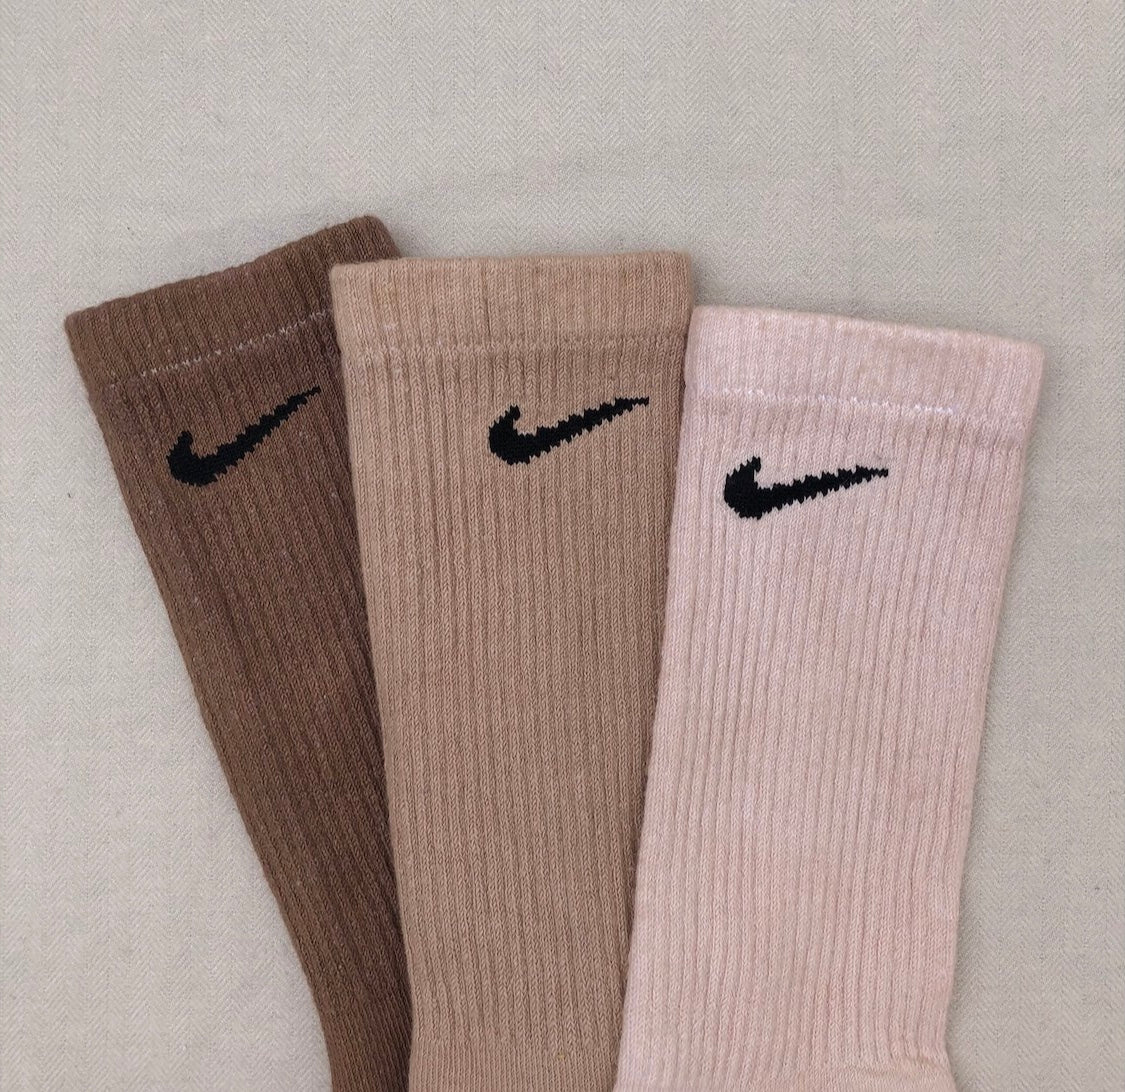 Nike Crew Socks